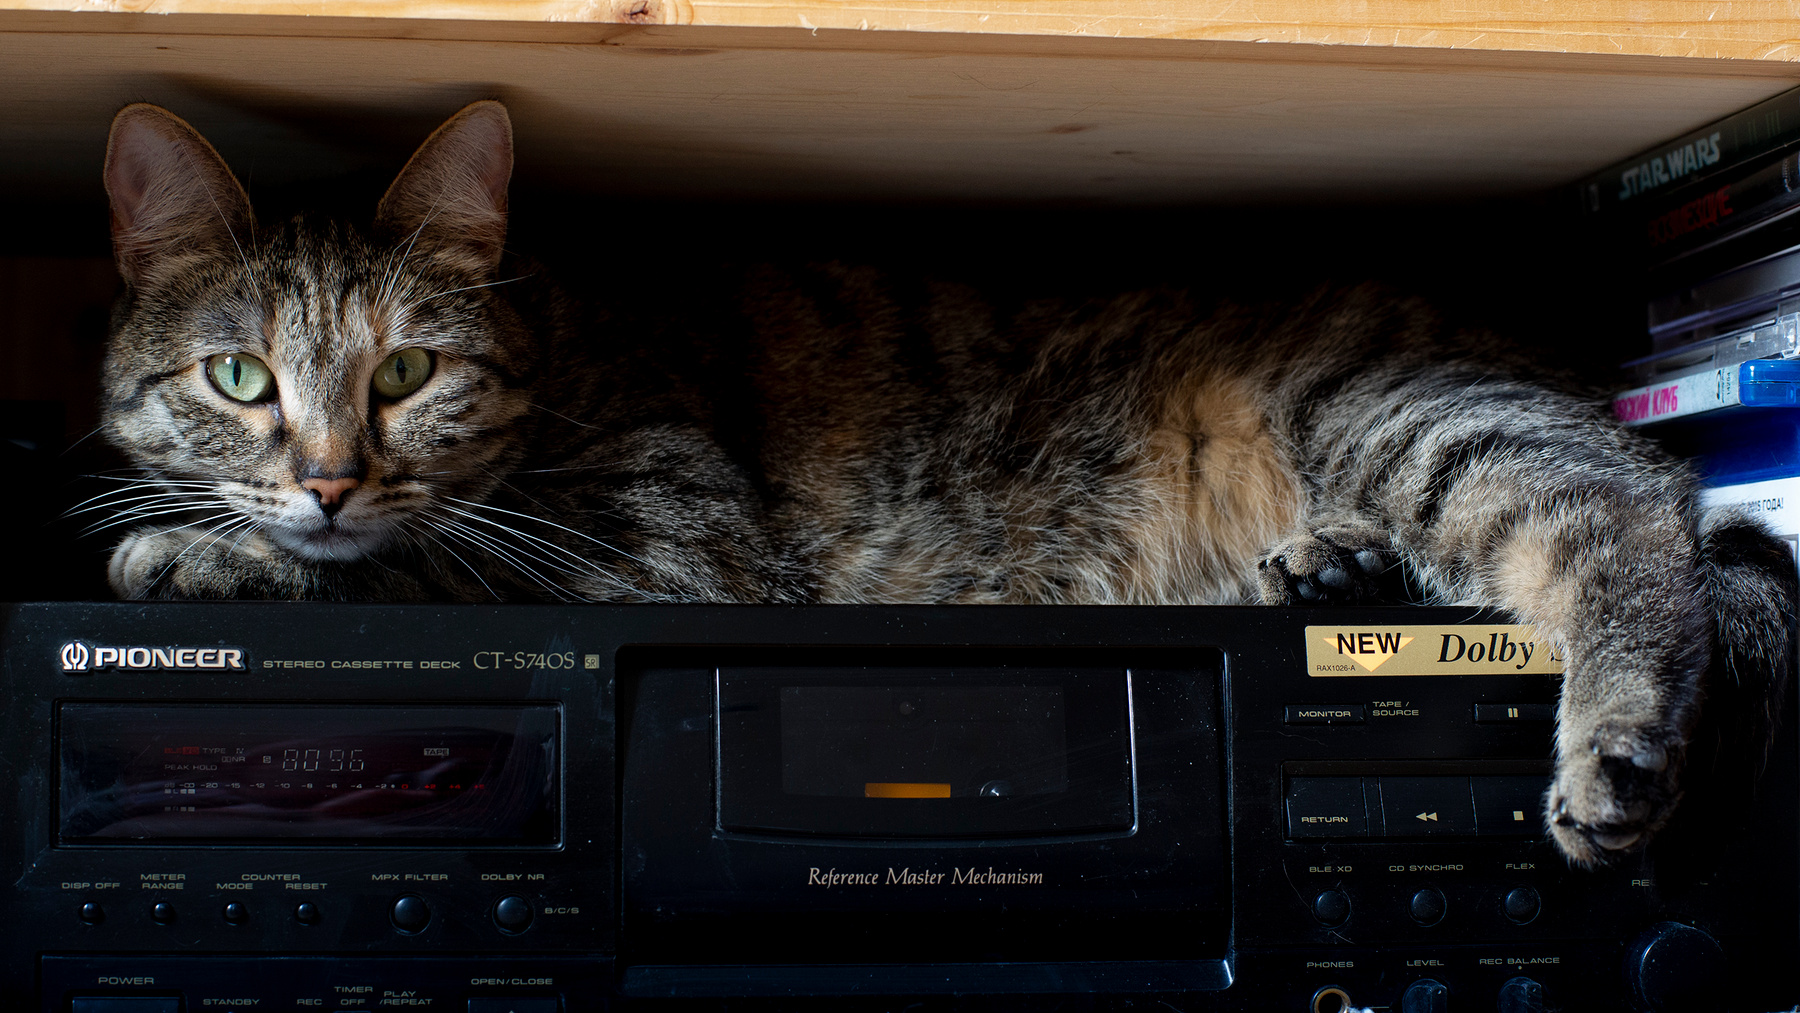 Кошка старого меломана кошка кот усы нос кассетник